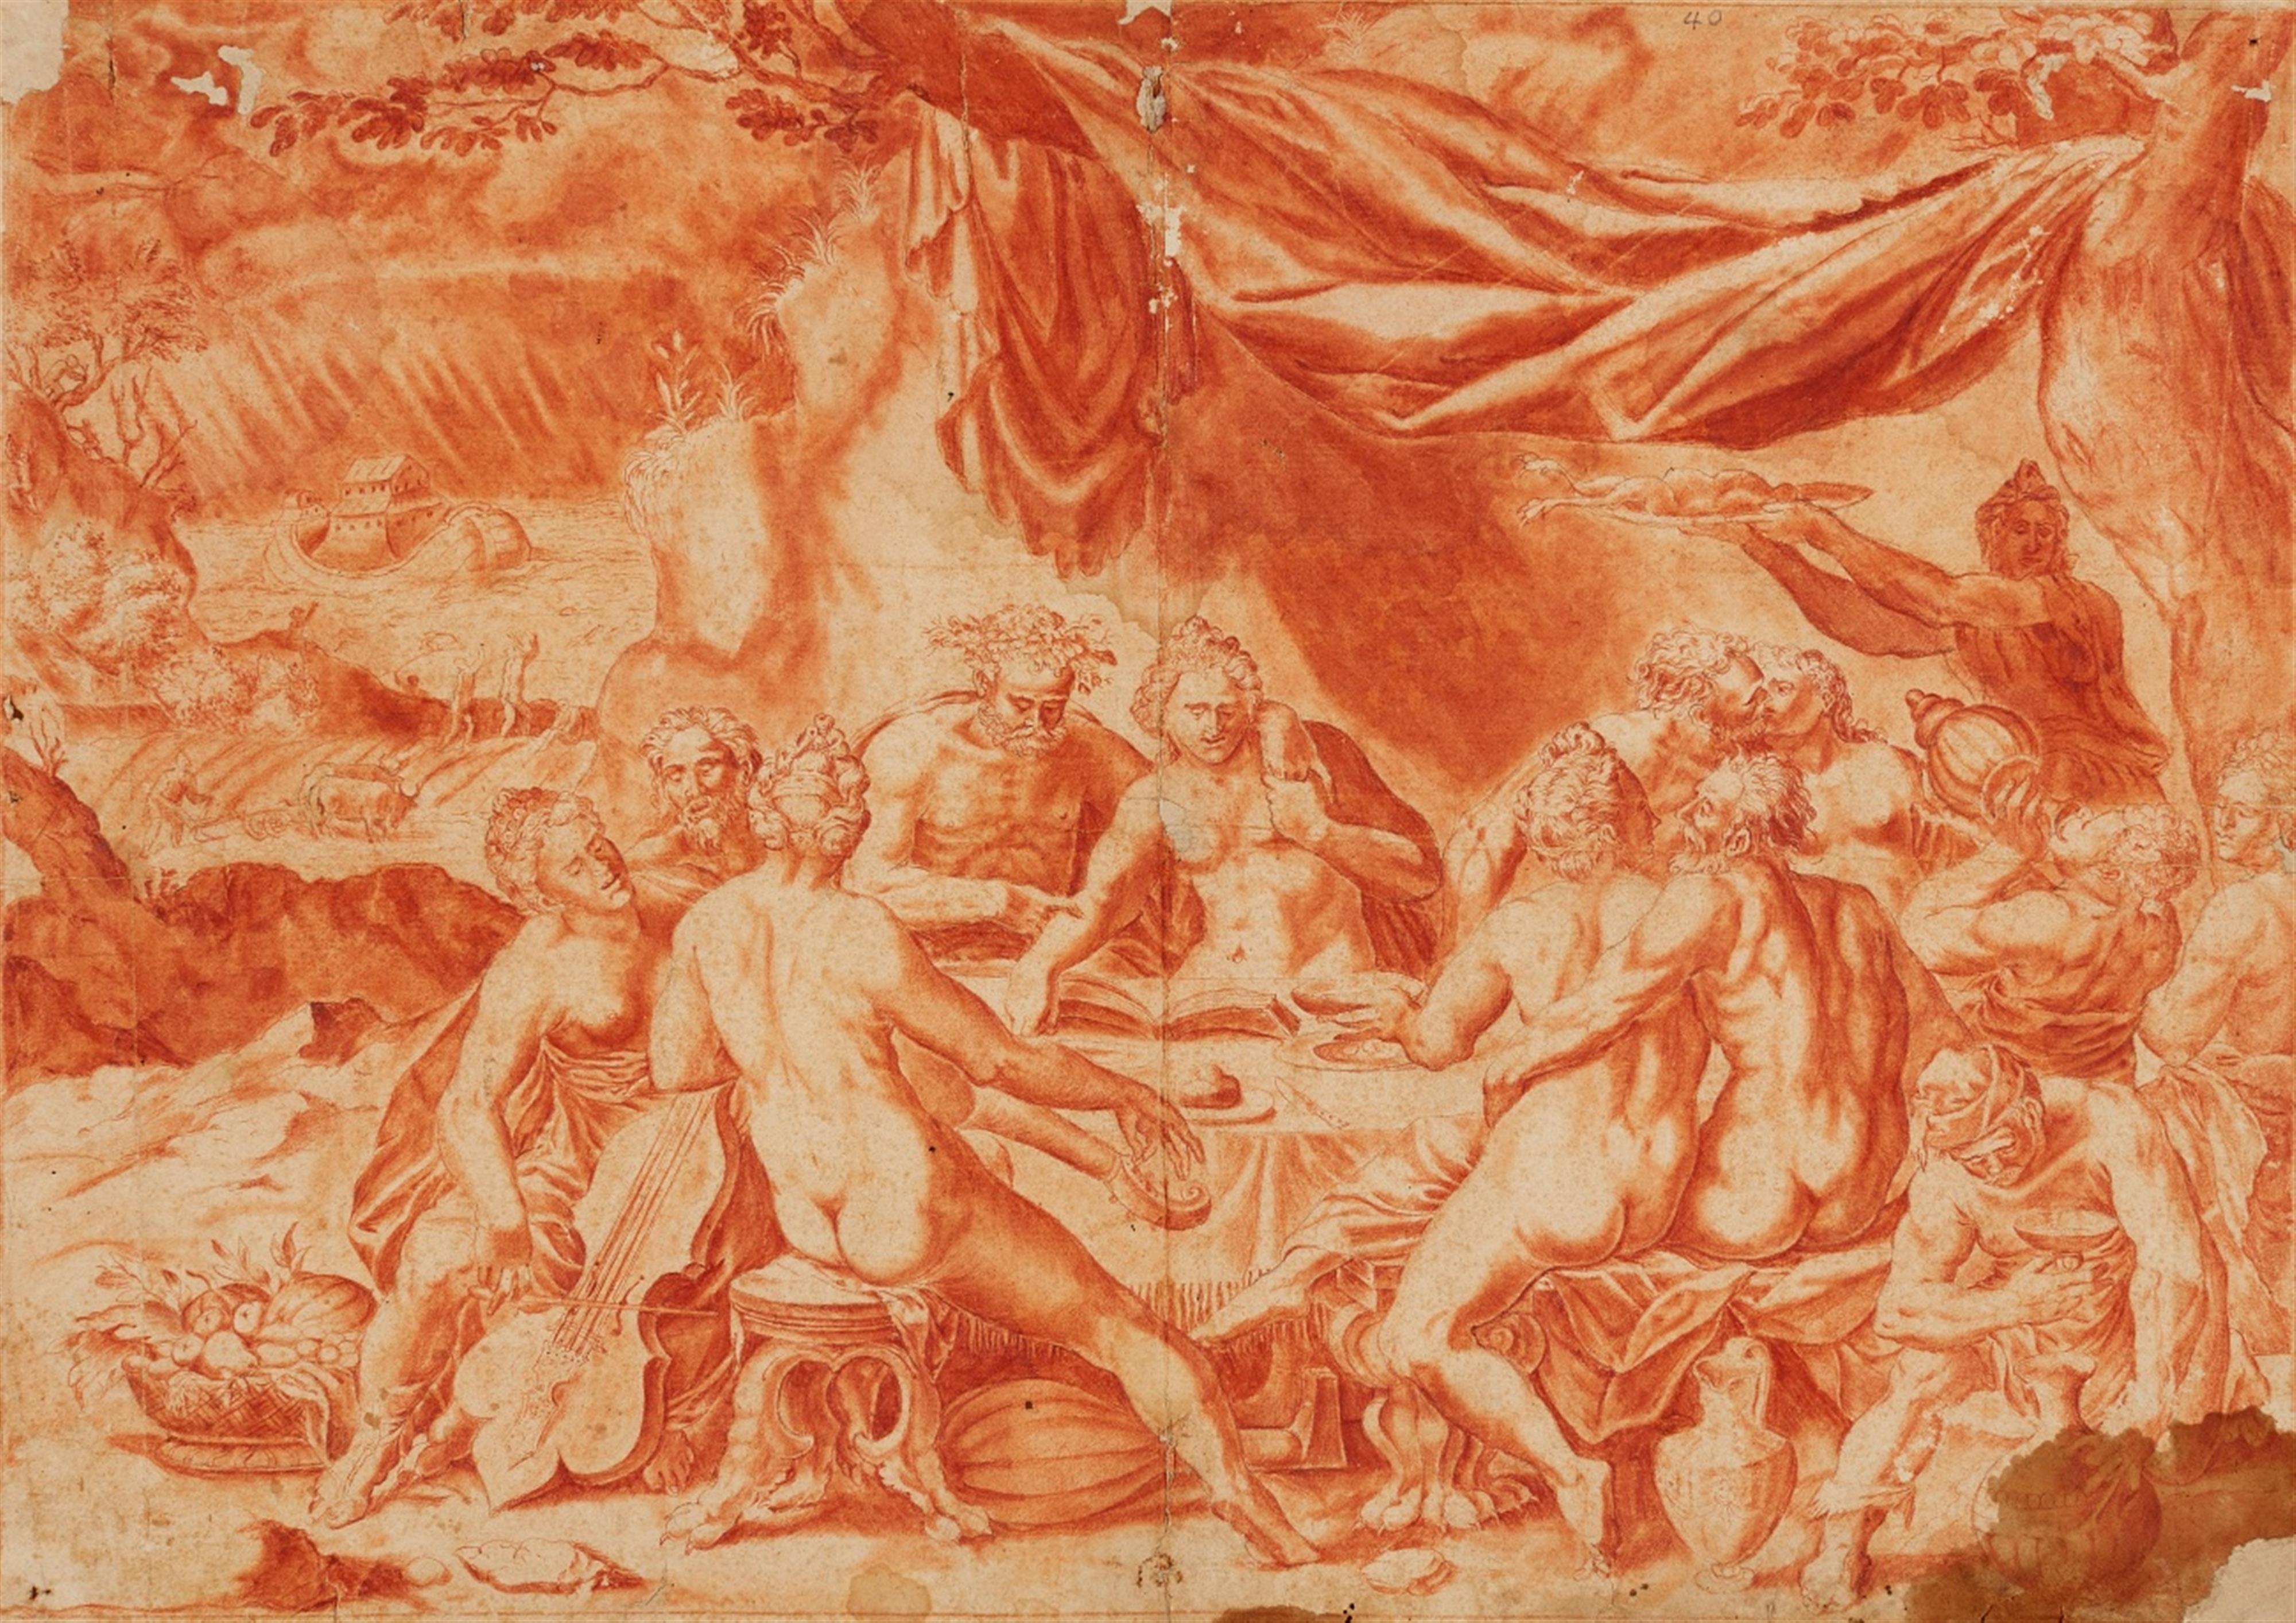 Cornelis Cornelisz. van Haarlem - Feast of the Gods - image-1